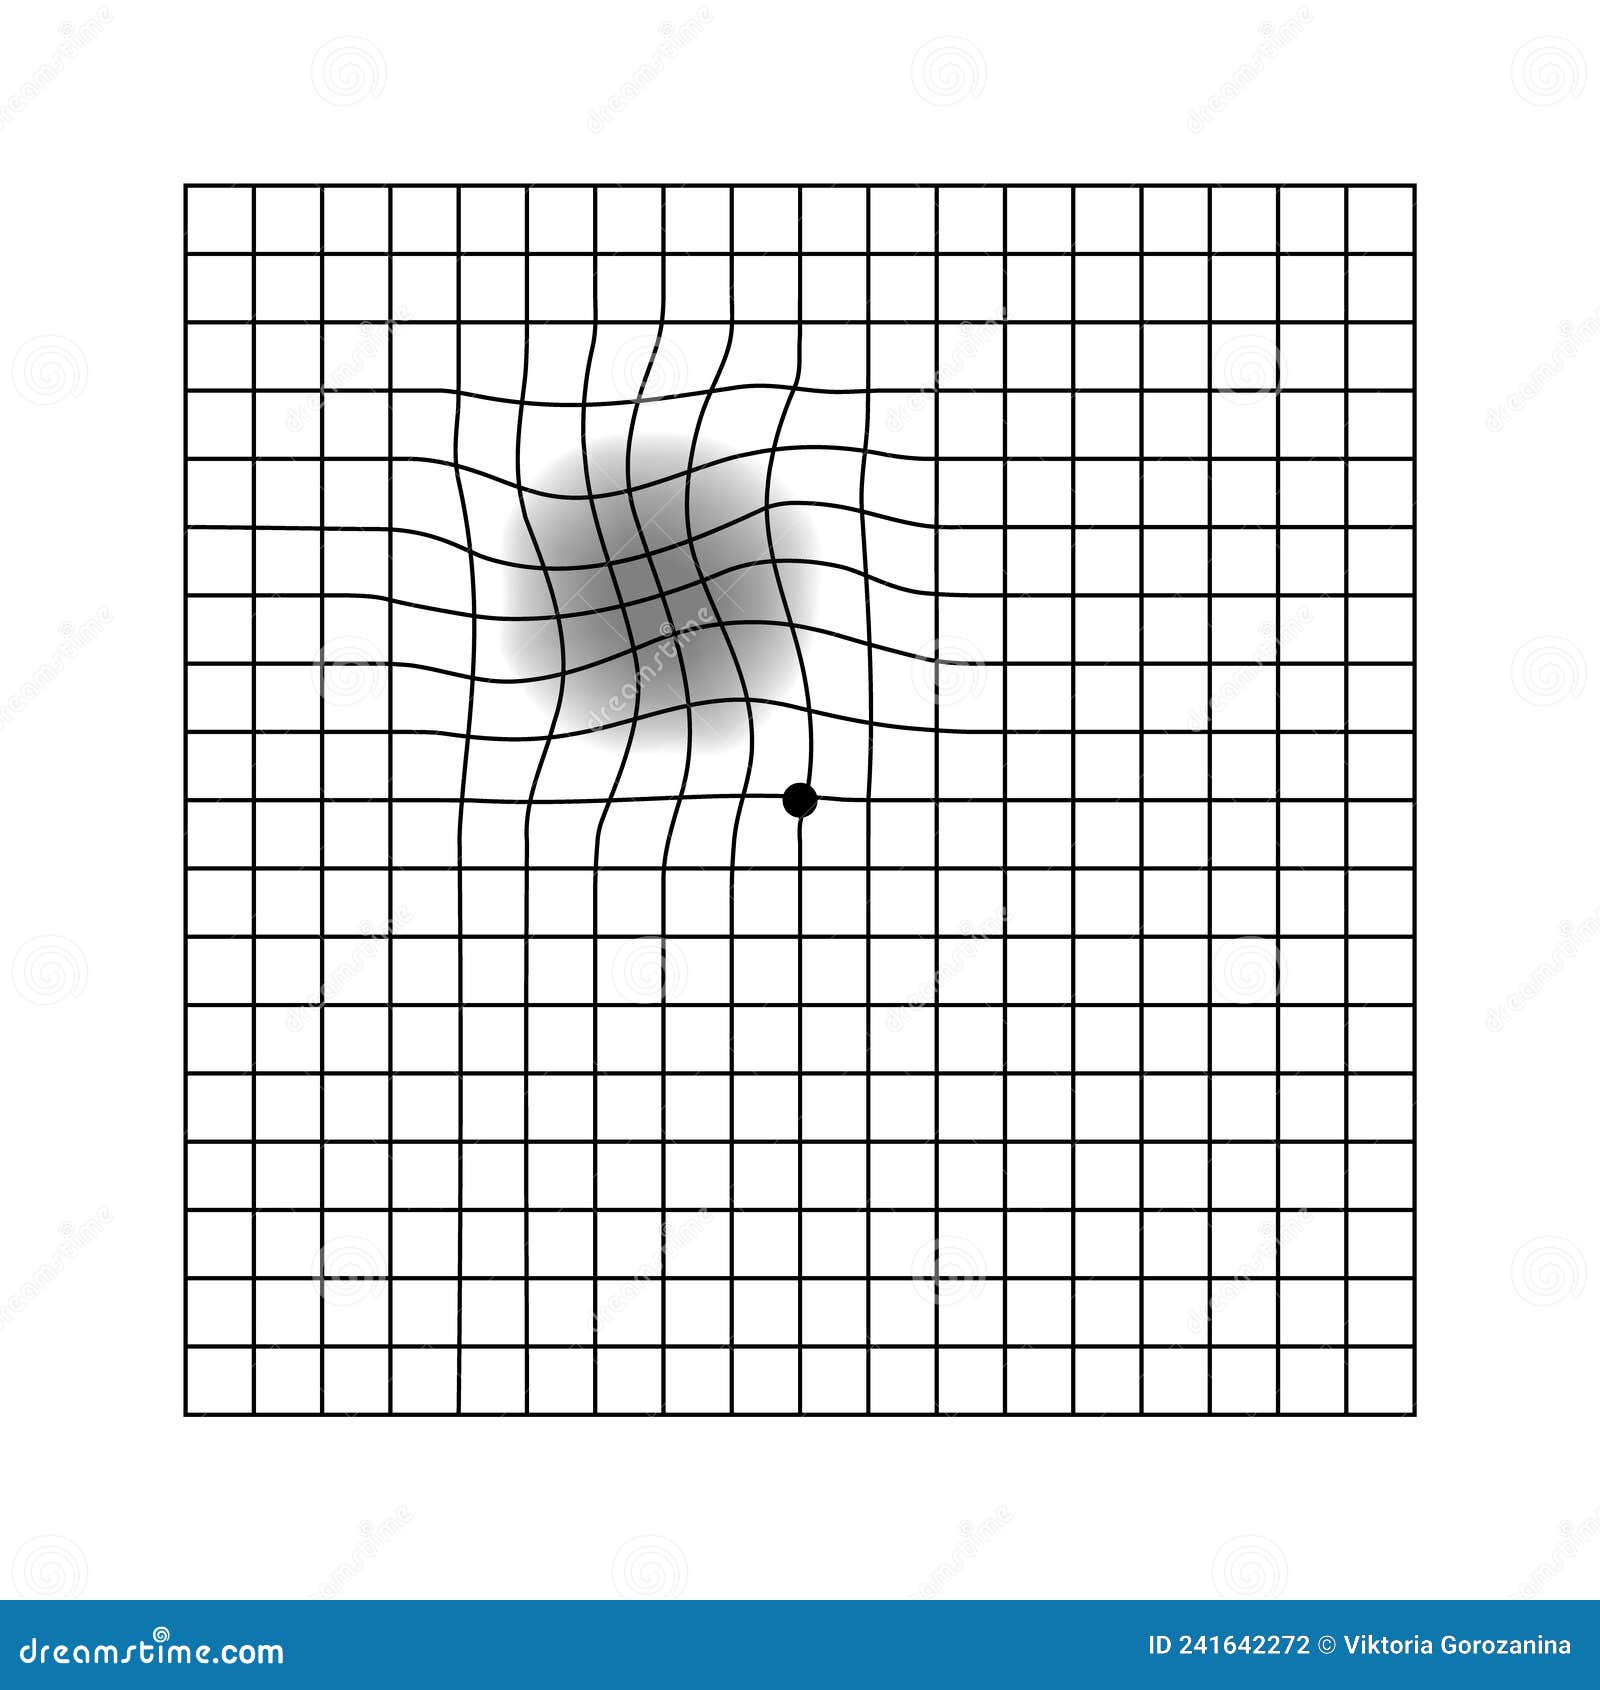 https://thumbs.dreamstime.com/z/amsler-eye-scotoma-test-grid-vector-printable-chart-retina-examination-dot-centre-vision-control-check-241642272.jpg